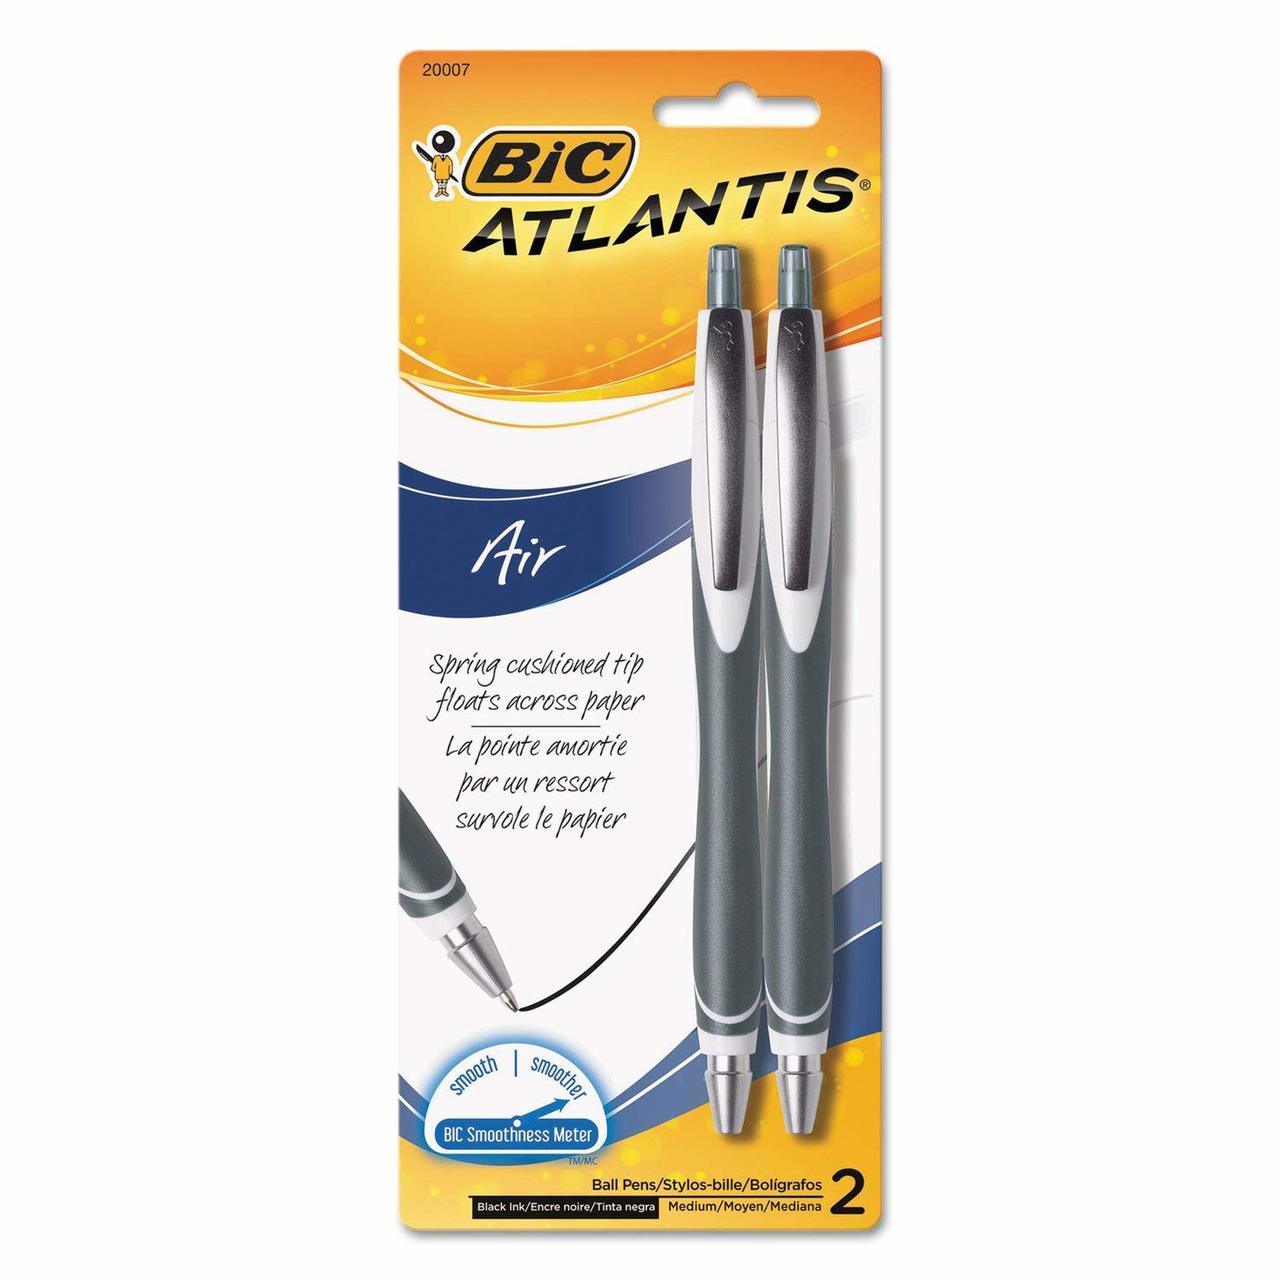 6 x Bic Atlantis Air 1.2mm Ball Pen - Black Ink - 2 Pack